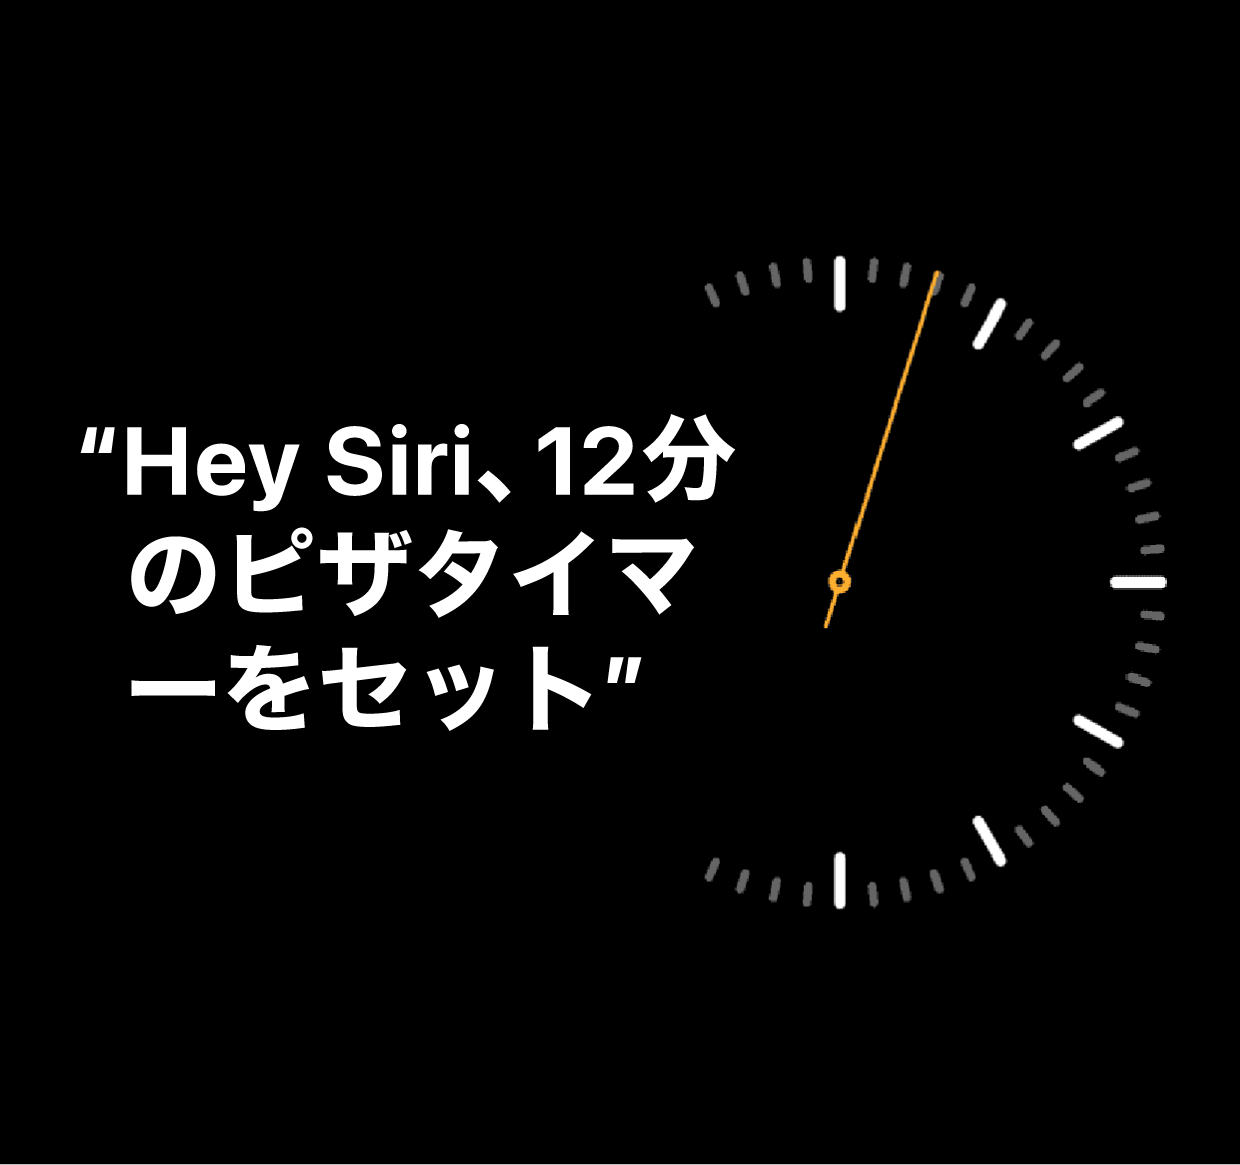 「Hey Siri、12分のピザタイマーをセット」という呼びかけの図